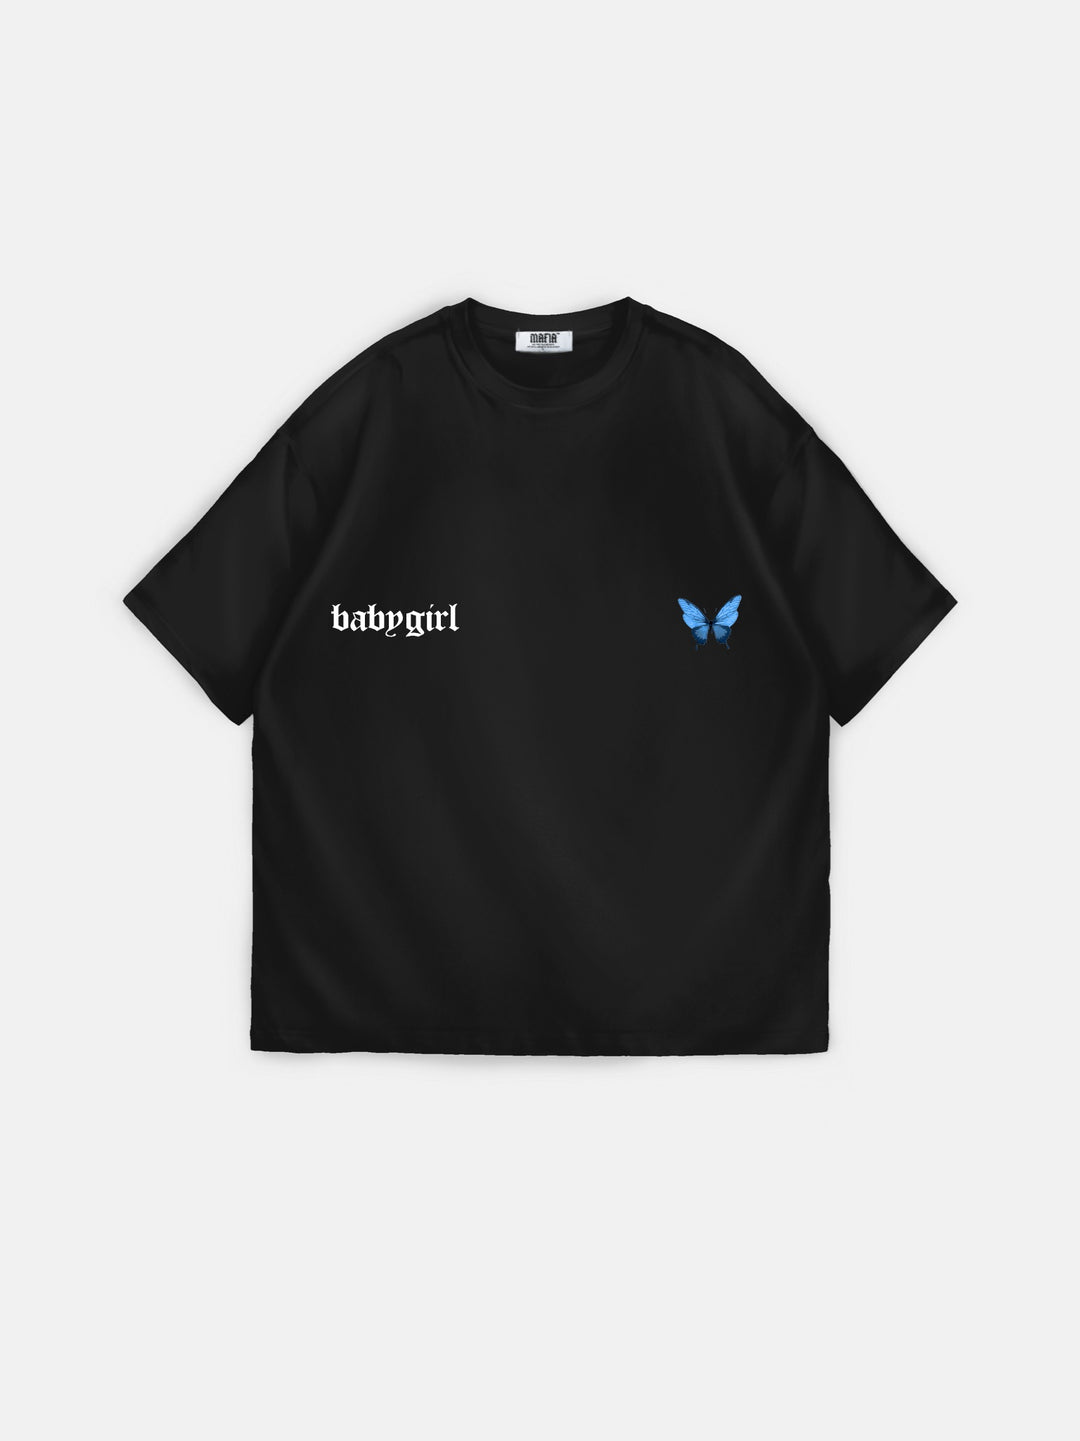 Oversize Babygirl T-shirt - Black and Blue